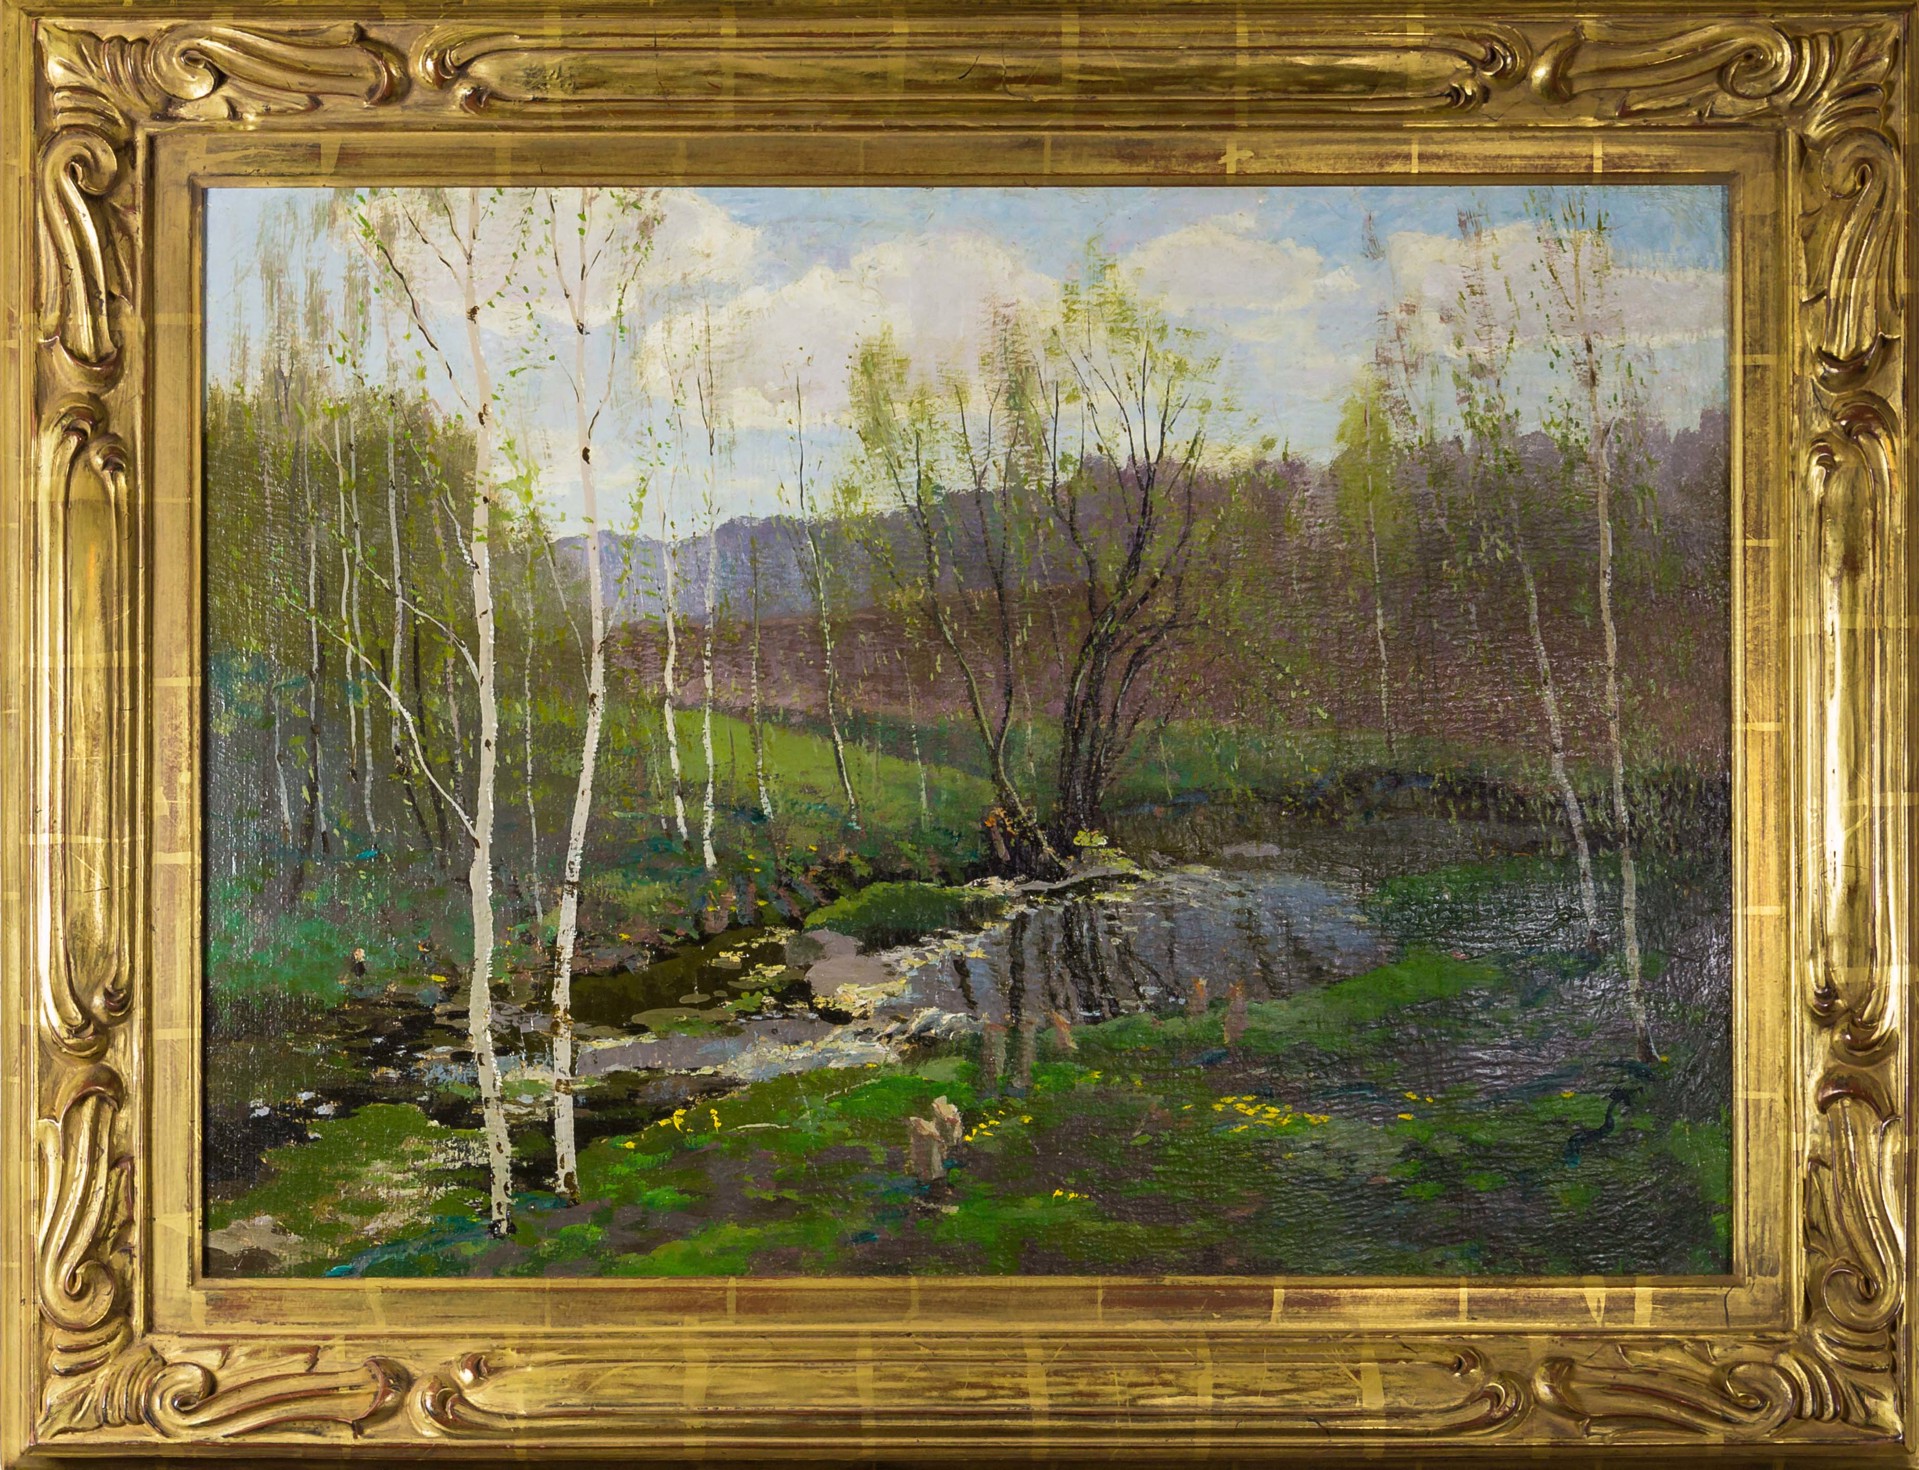 At the Brook by Vladimir Krantz